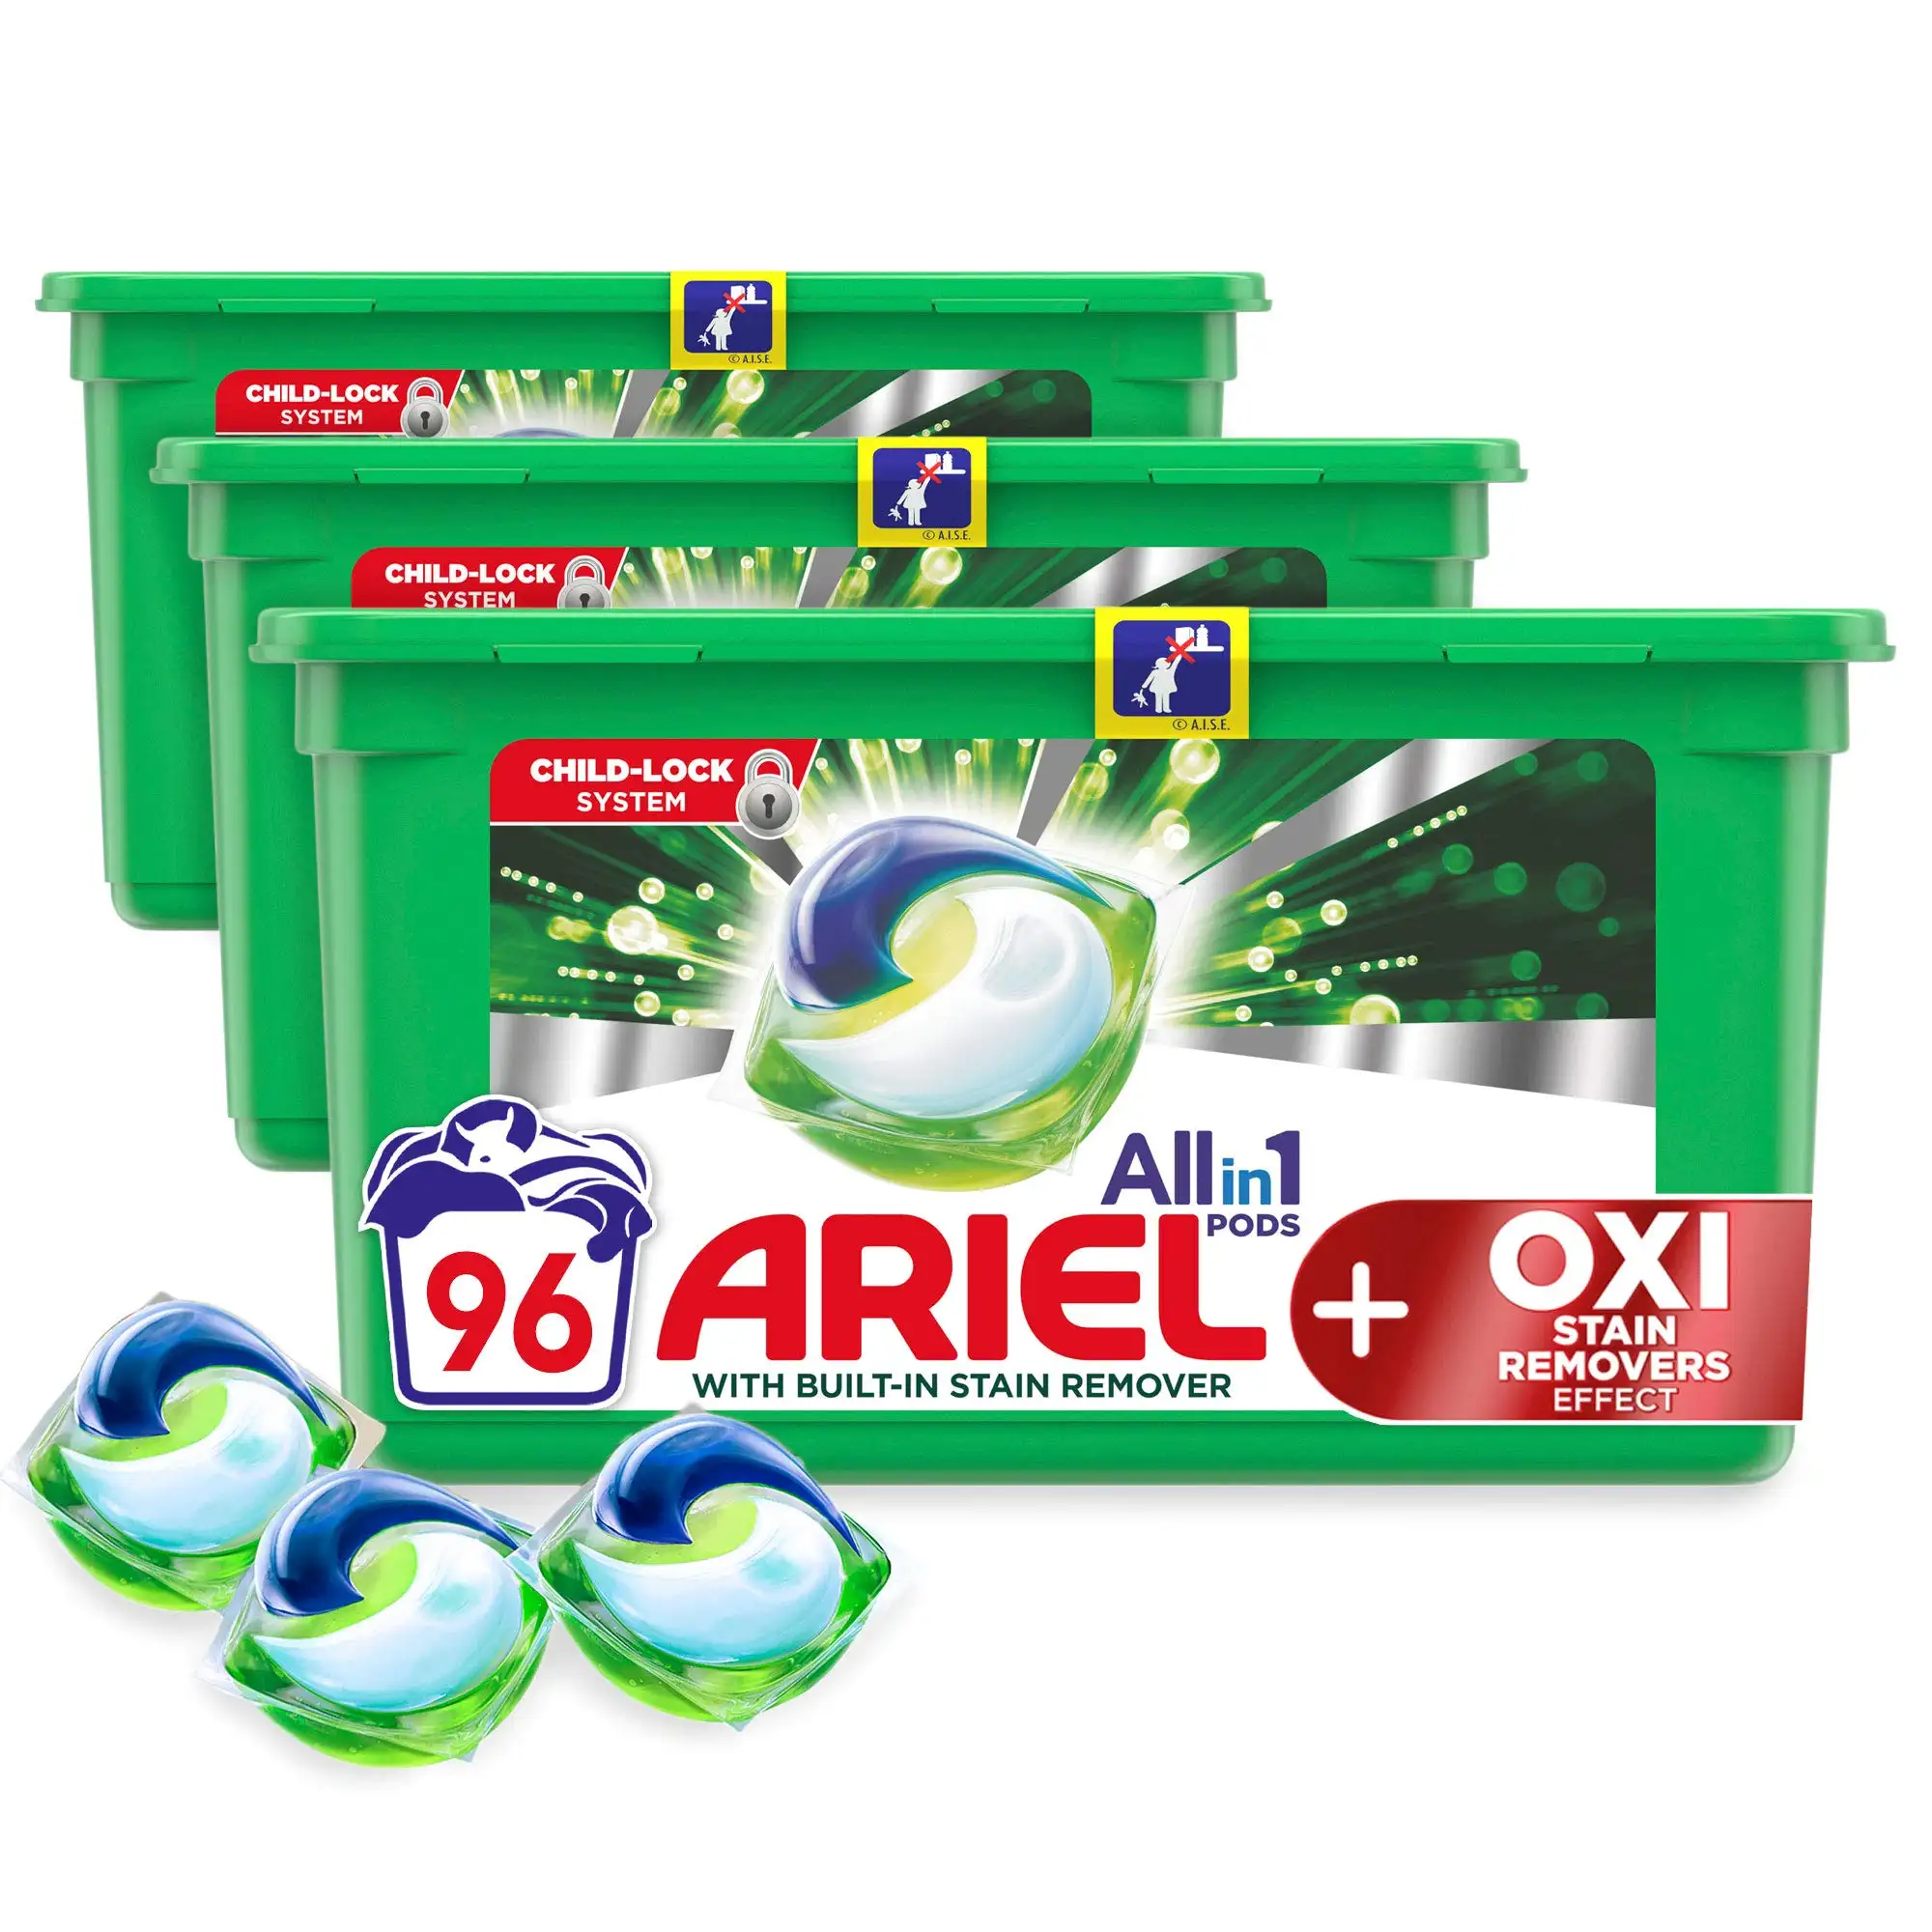 Ariel jel deterjan kapsül/Ariel ekstra leke çıkarma hepsi 1 bakla ihracat